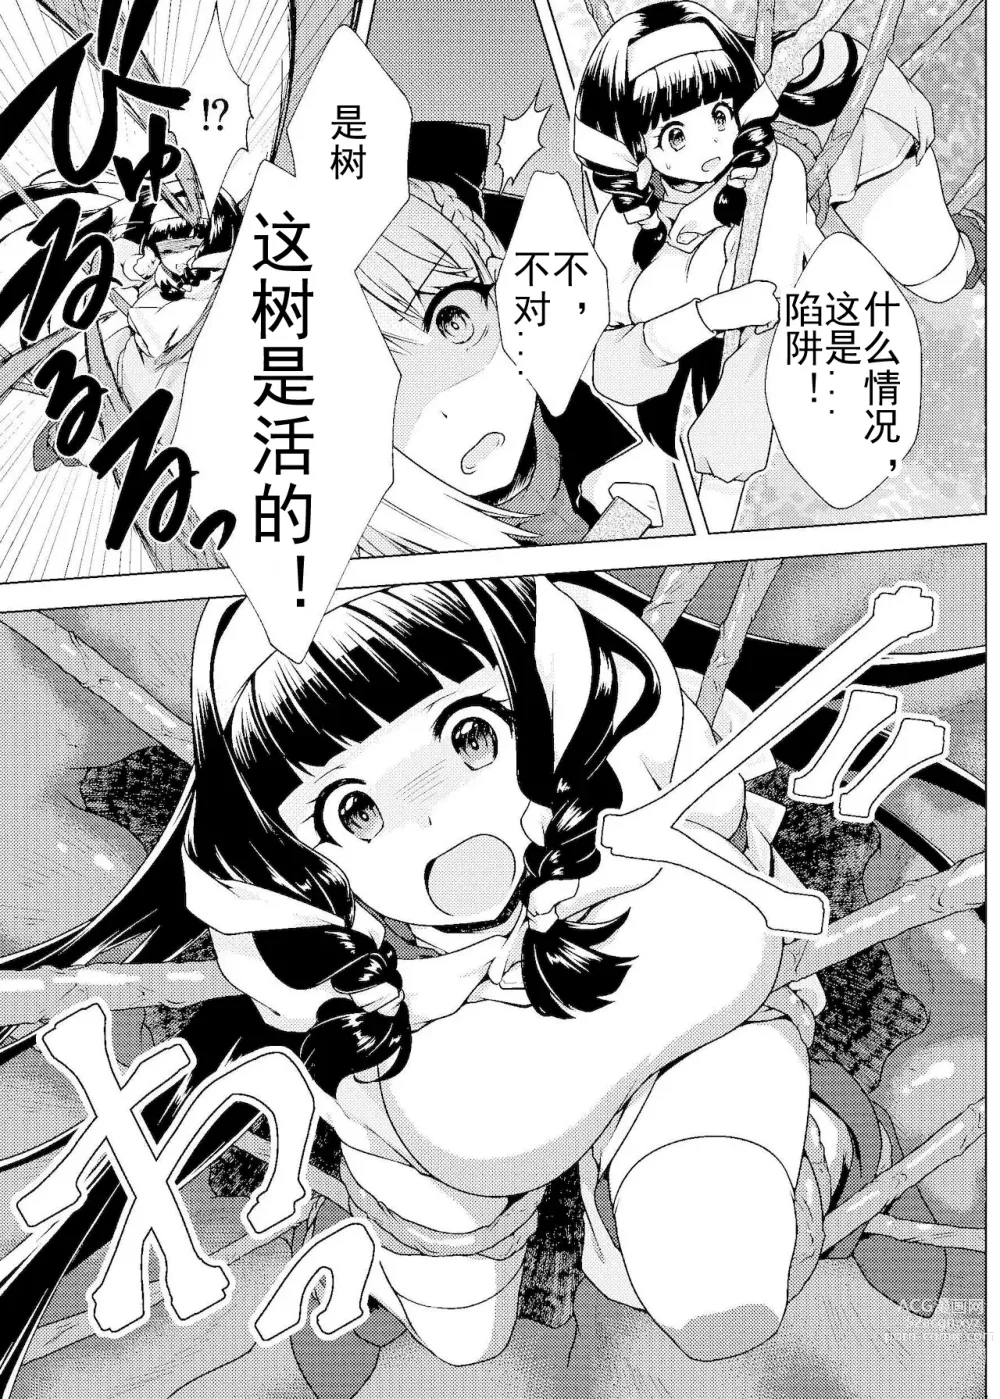 Page 4 of manga Nakayoshi Boukensha no Marunomi Haiboku End